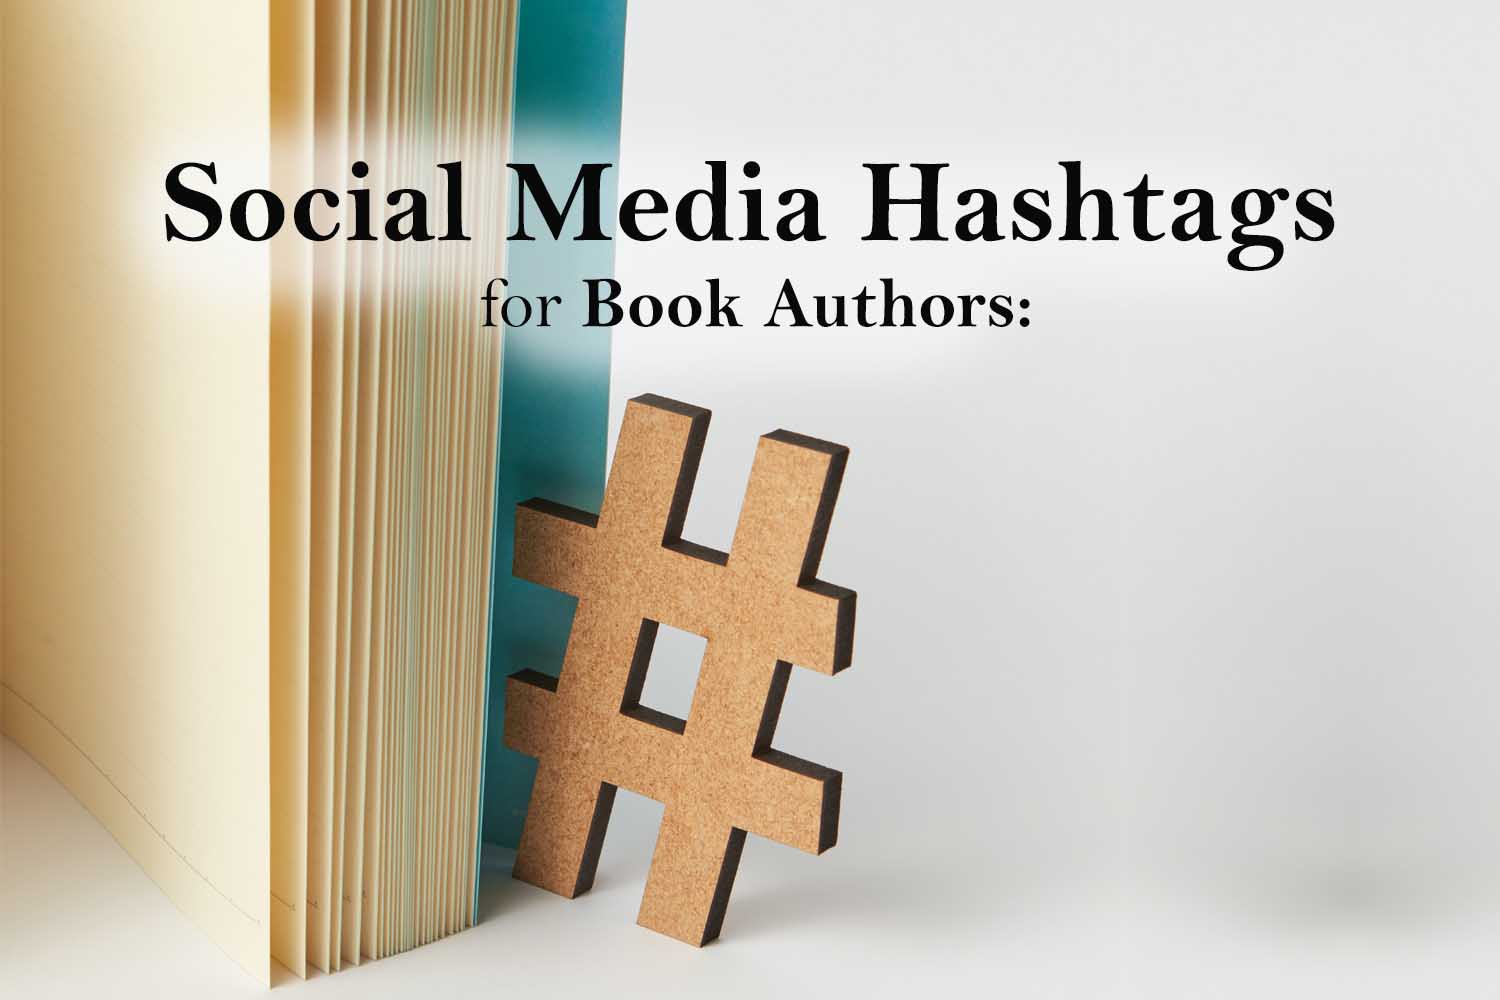 Social Media Hashtags for Book Authors